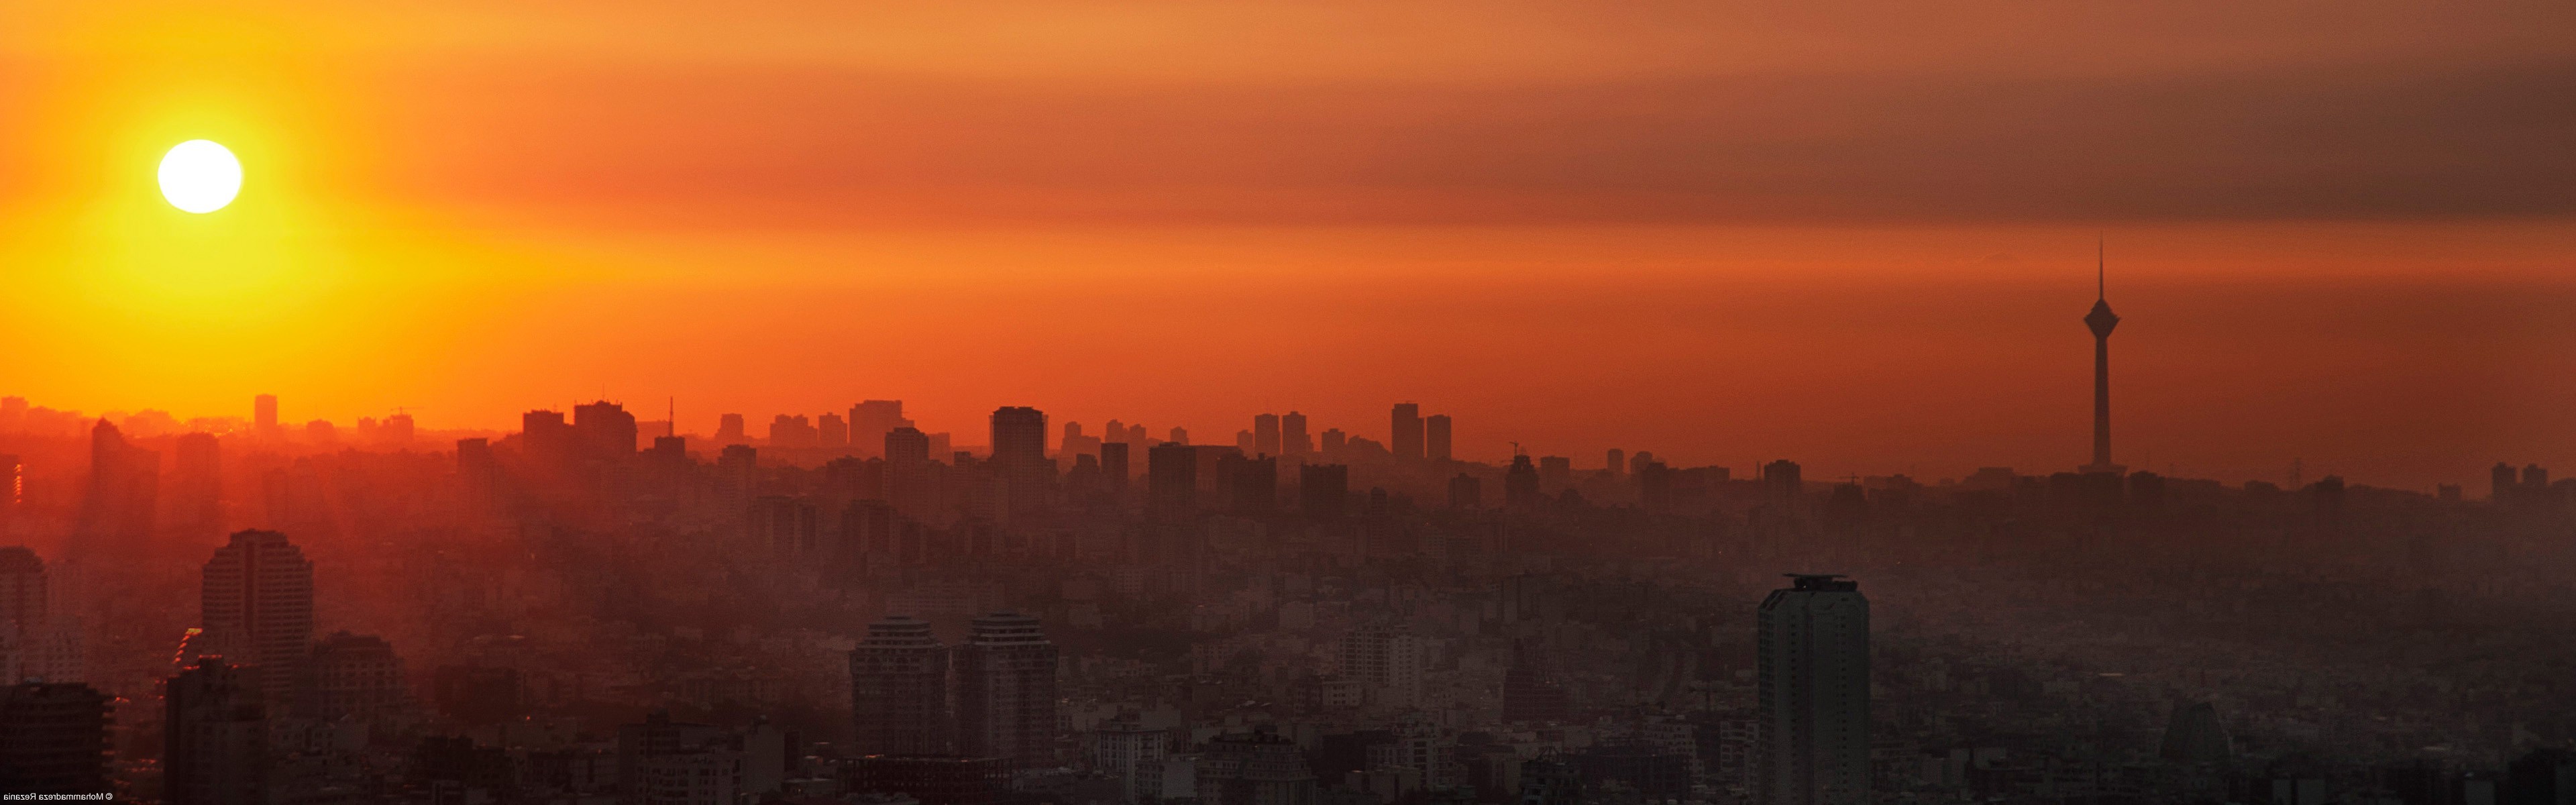 Iran, Tehran, City, Milad Tower, Tower, Sunset Wallpapers HD / Desktop